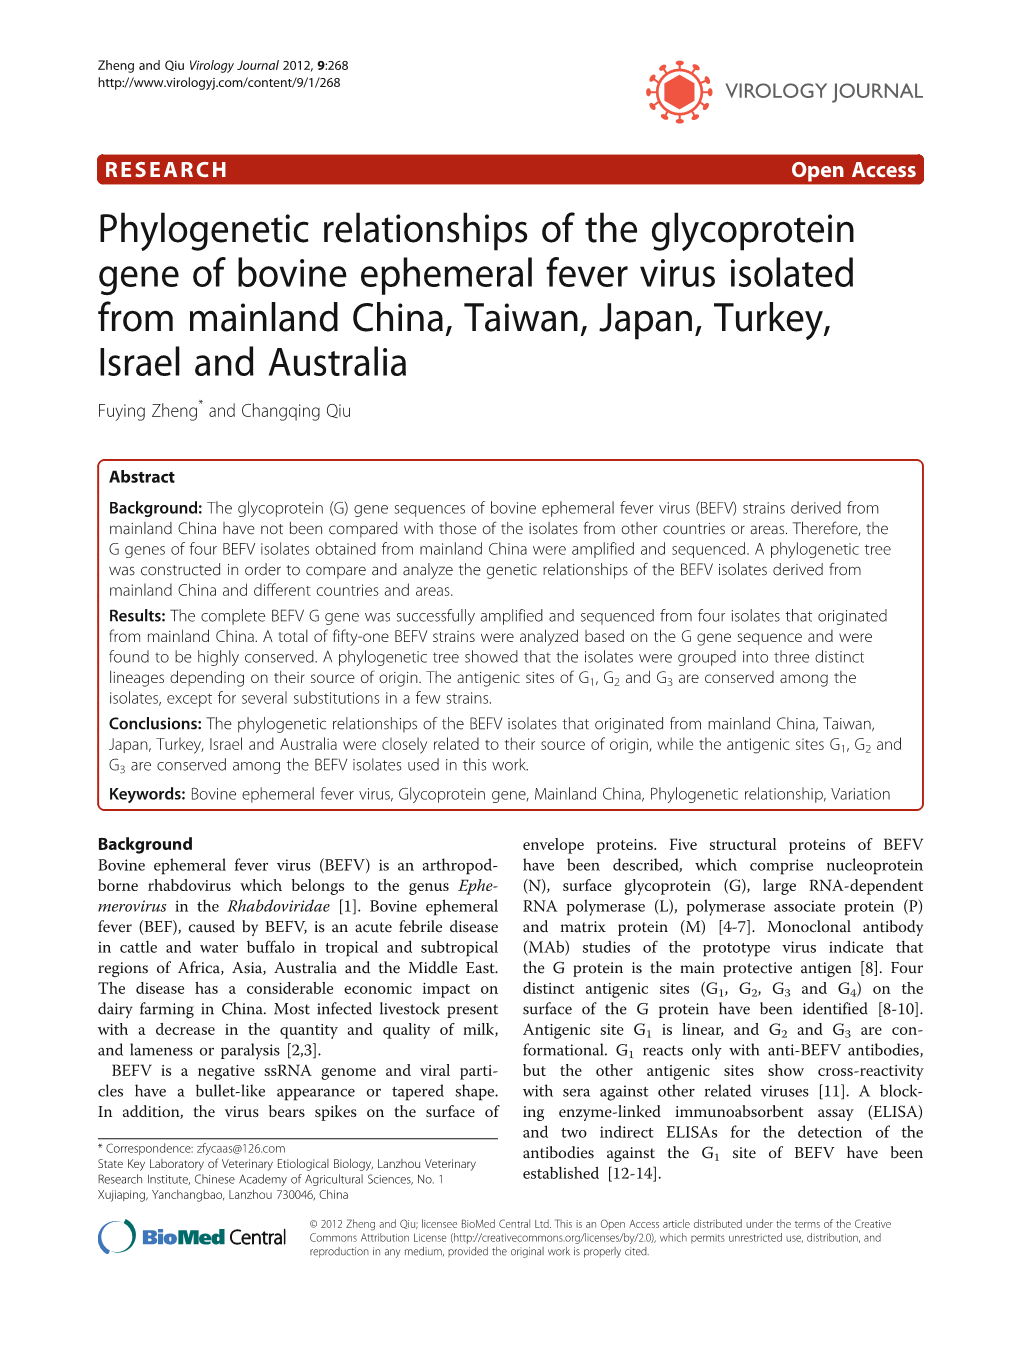 Phylogenetic Relationships of the Glycoprotein Gene of Bovine